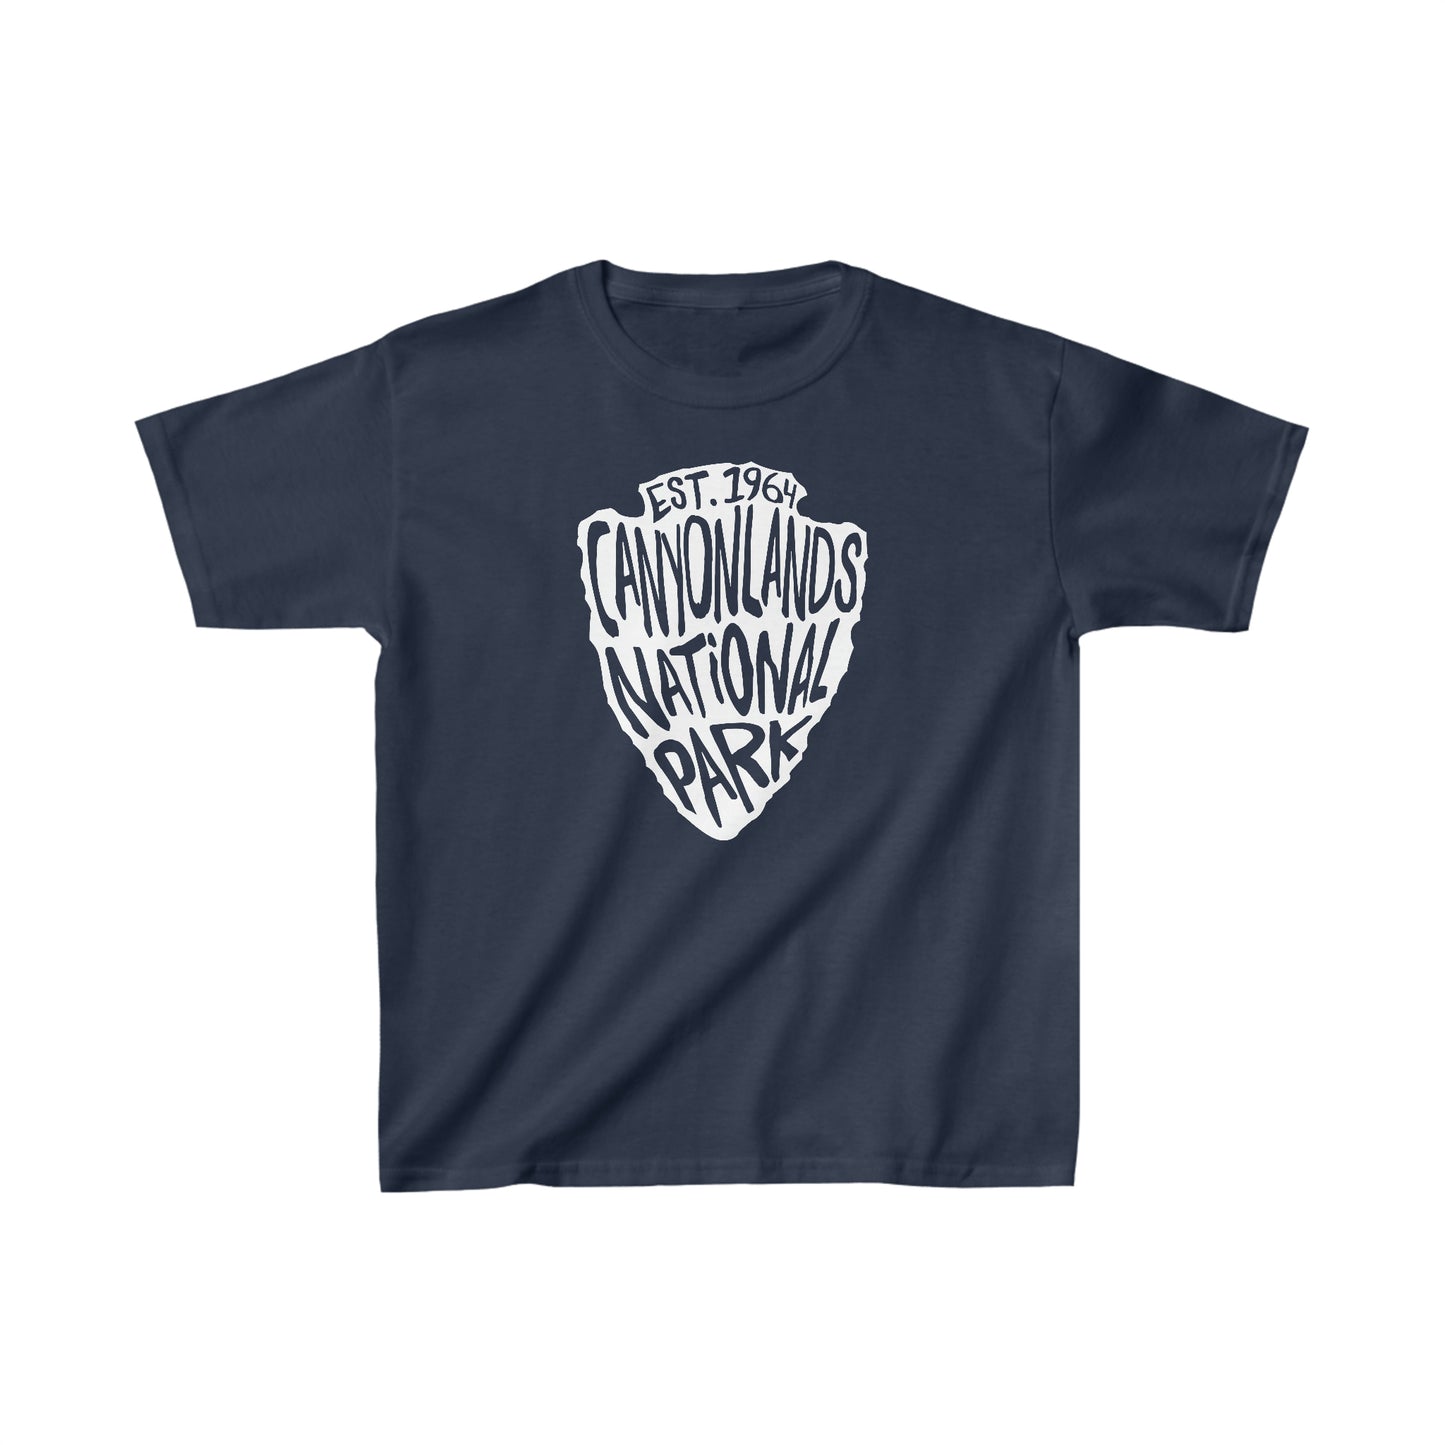 Canyonlands National Park Child T-Shirt - Arrowhead Design